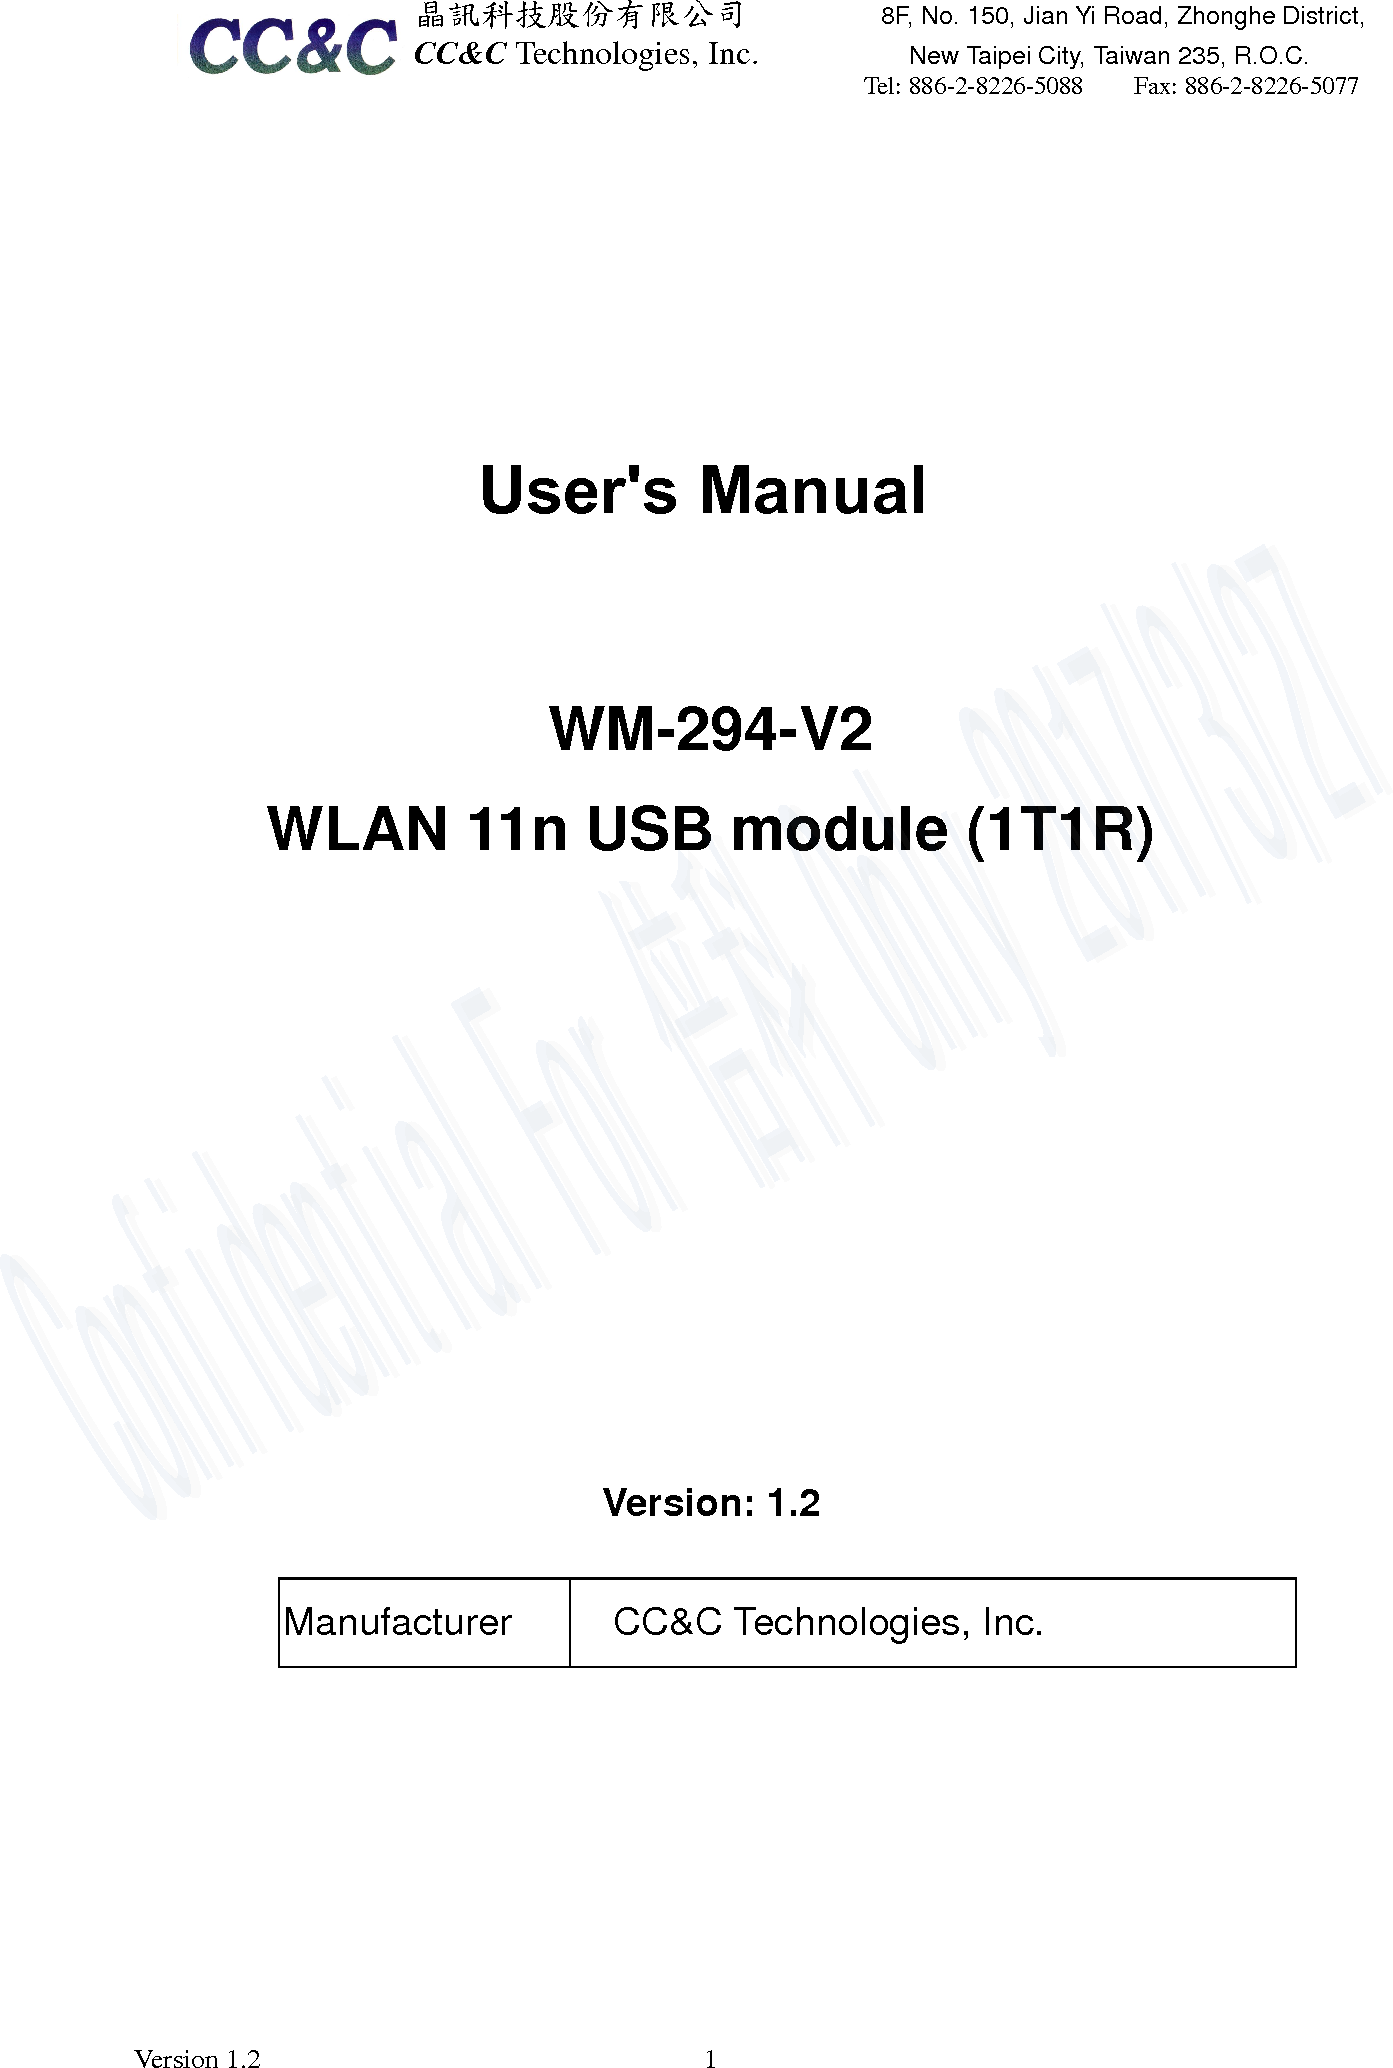  晶訊科技股份有限公司    8F, No. 150, Jian Yi Road, Zhonghe District, CC&amp;C Technologies, Inc.  New Taipei City, Taiwan 235, R.O.C. Tel: 886-2-8226-5088        Fax: 886-2-8226-5077 Version 1.2  1 User&apos;s Manual WM-294-V2 WLAN 11n USB module (1T1R) Version: 1.2 Manufacturer  CC&amp;C Technologies, Inc. 